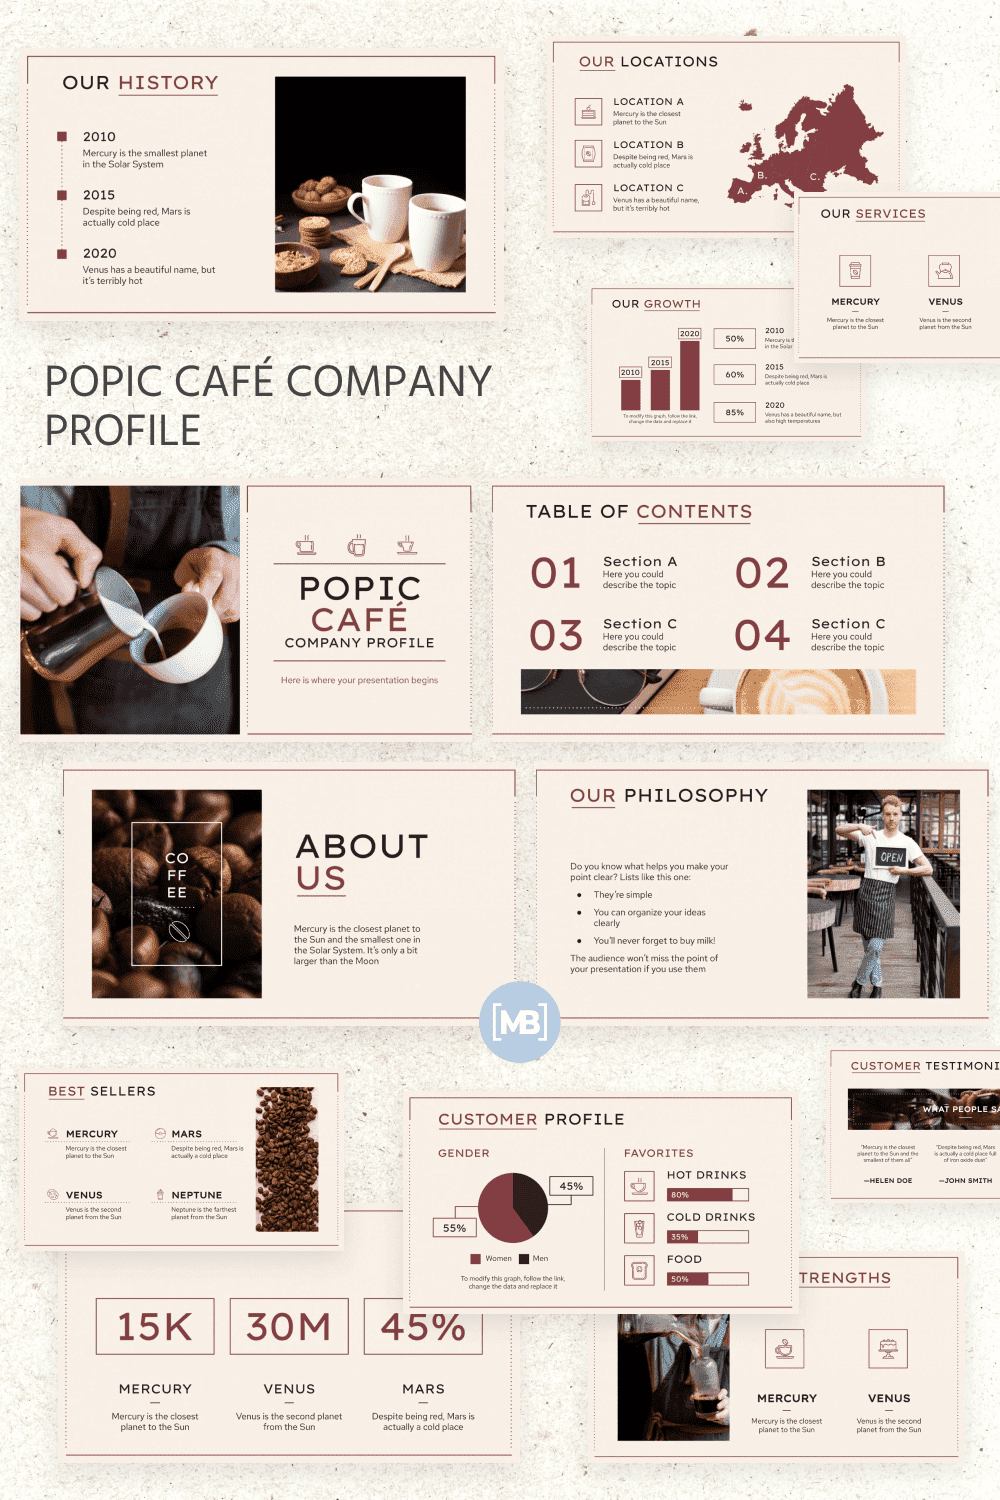 Popic café company profile.